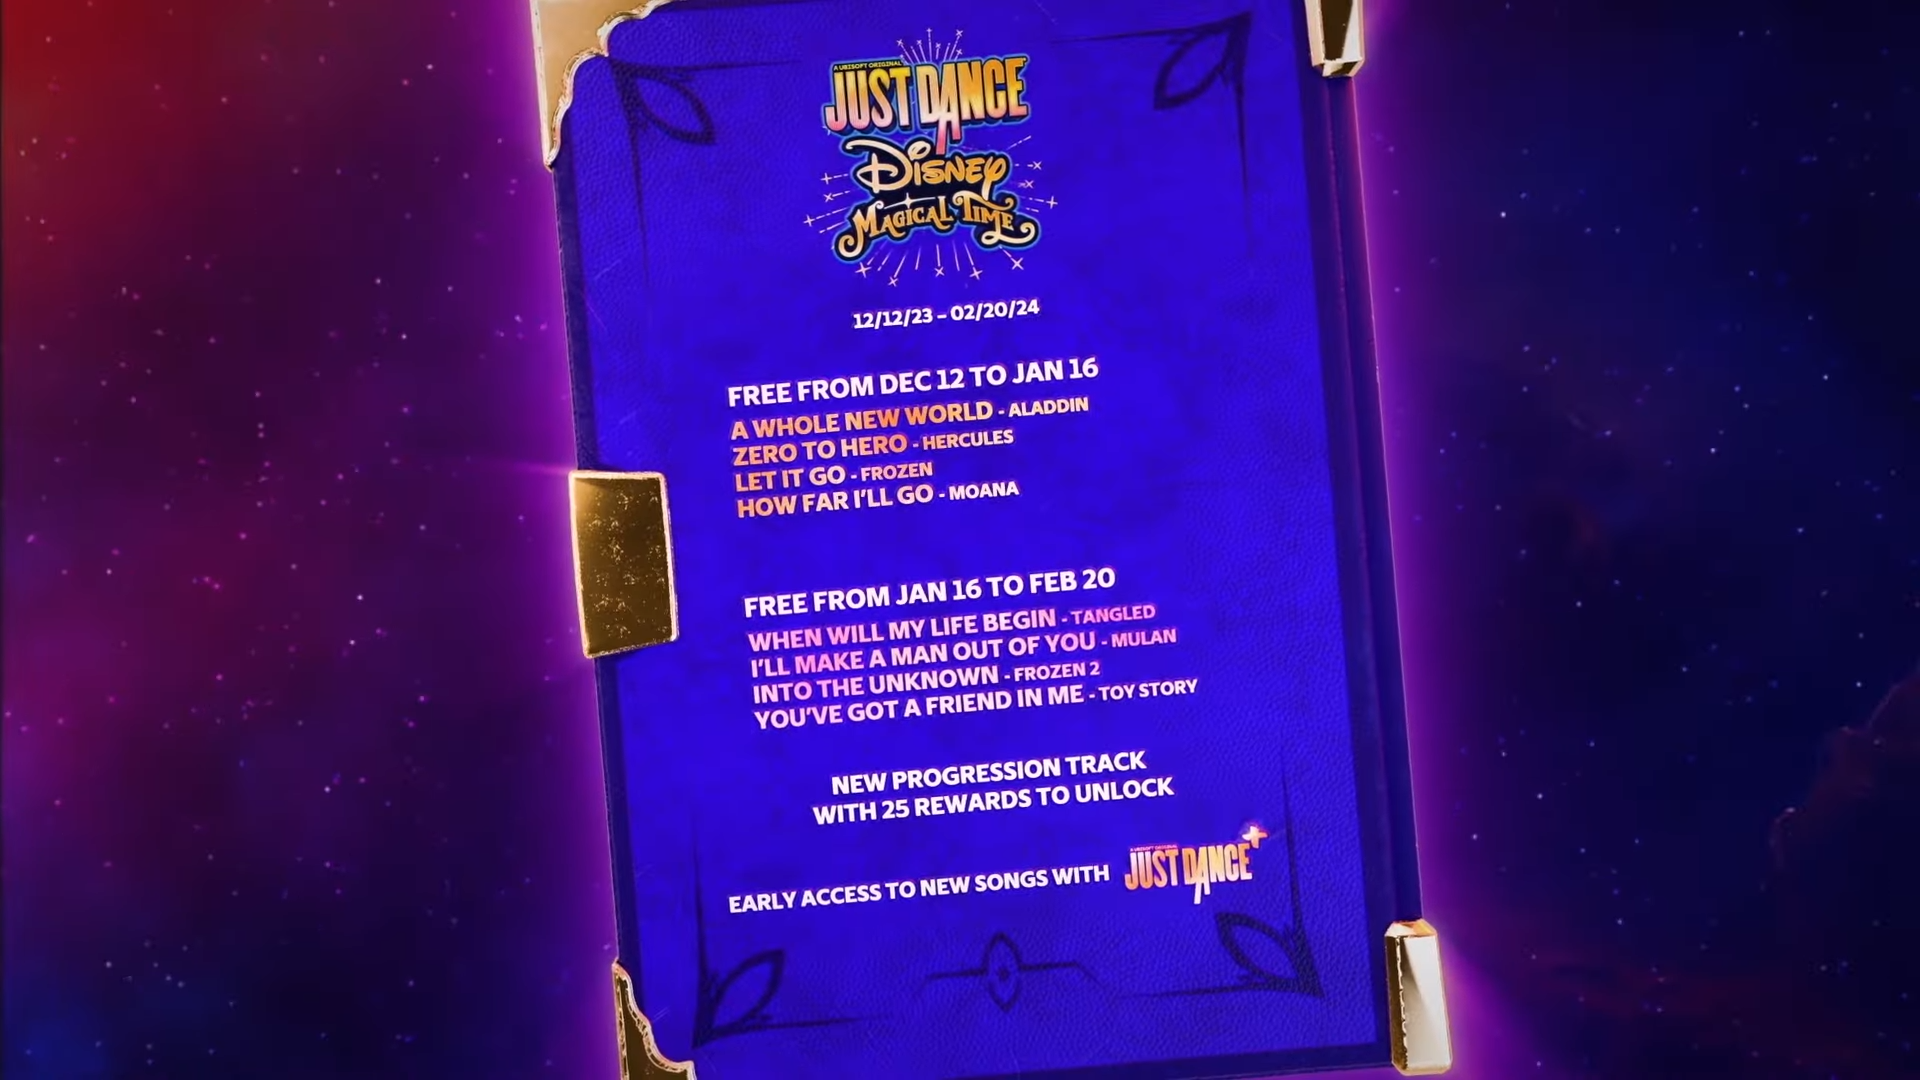 Just Dance 2024 Edition - Wikipedia